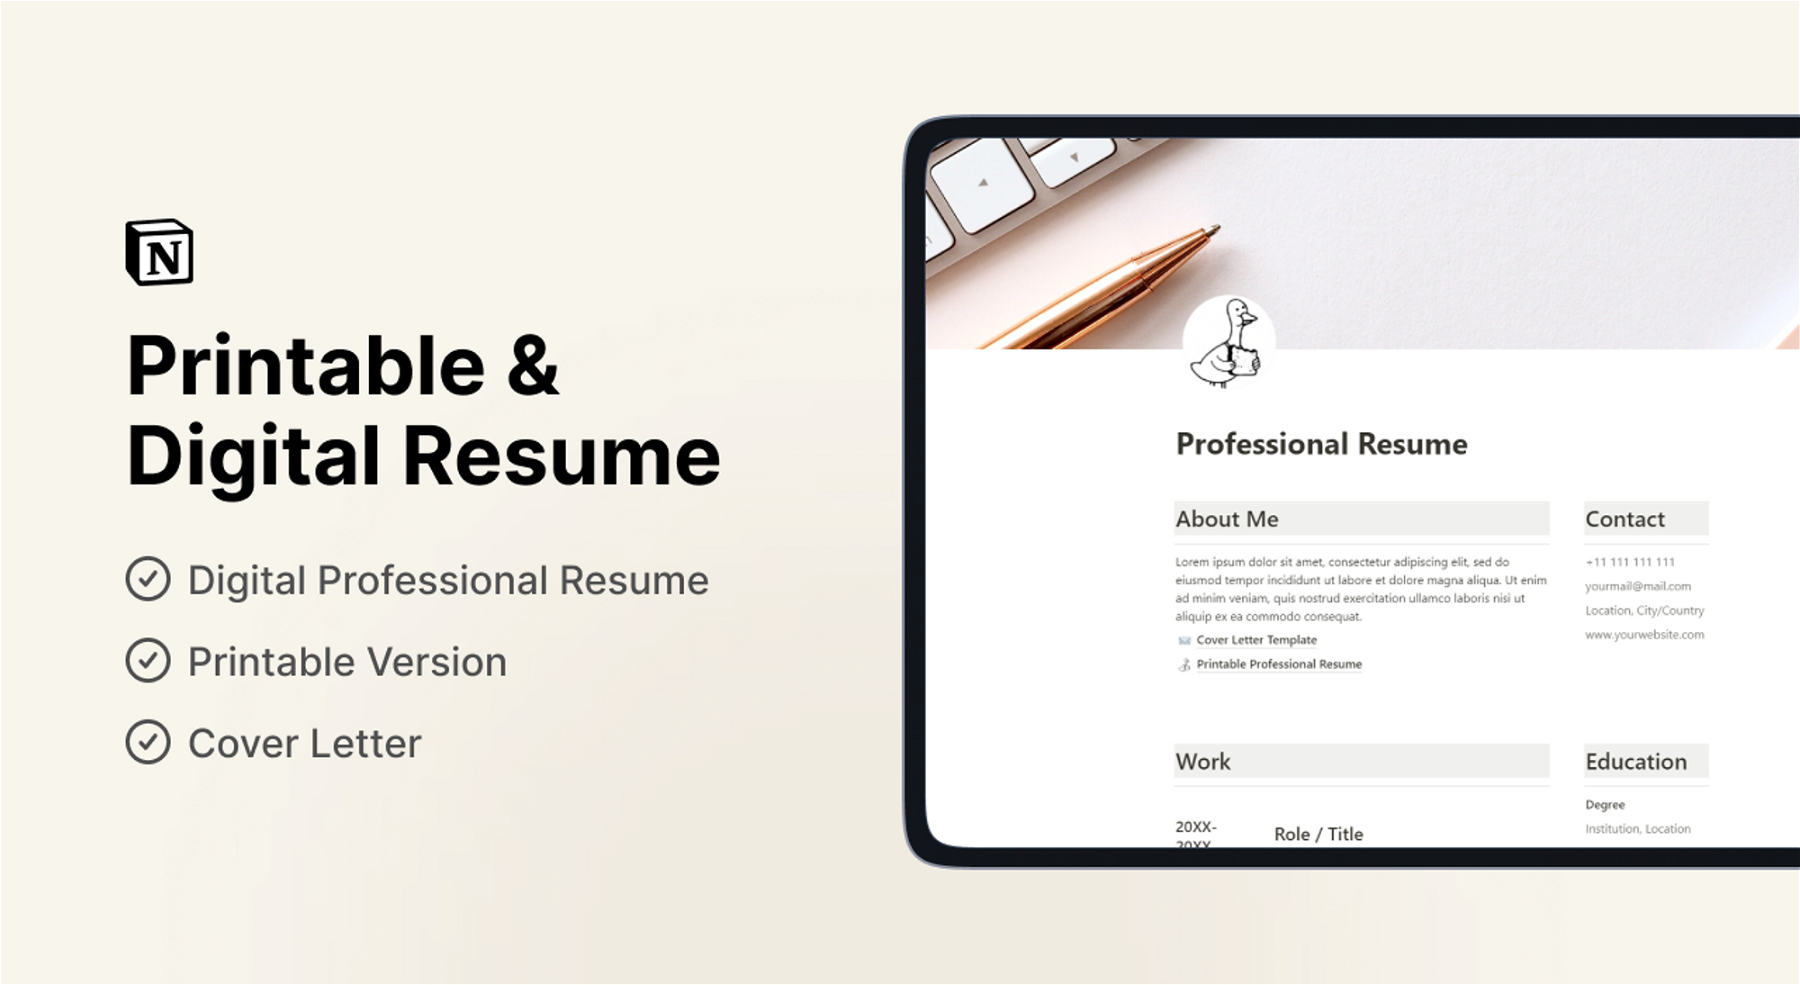 Printable & Digital Professional Resume